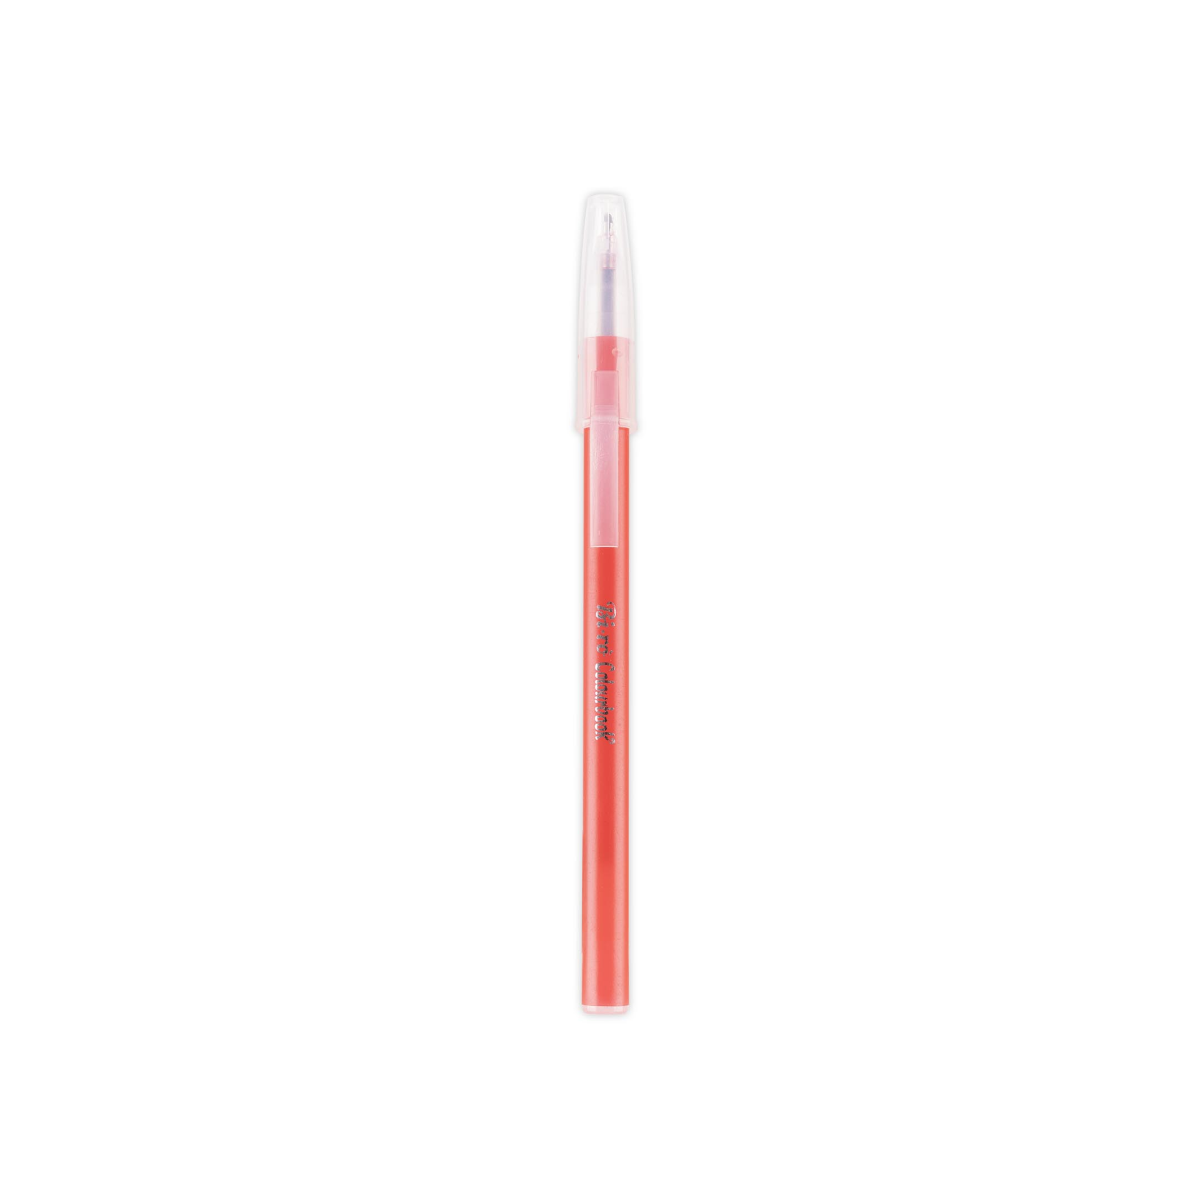 Blister 1 penna stilografica scolastica rossa + cartucce